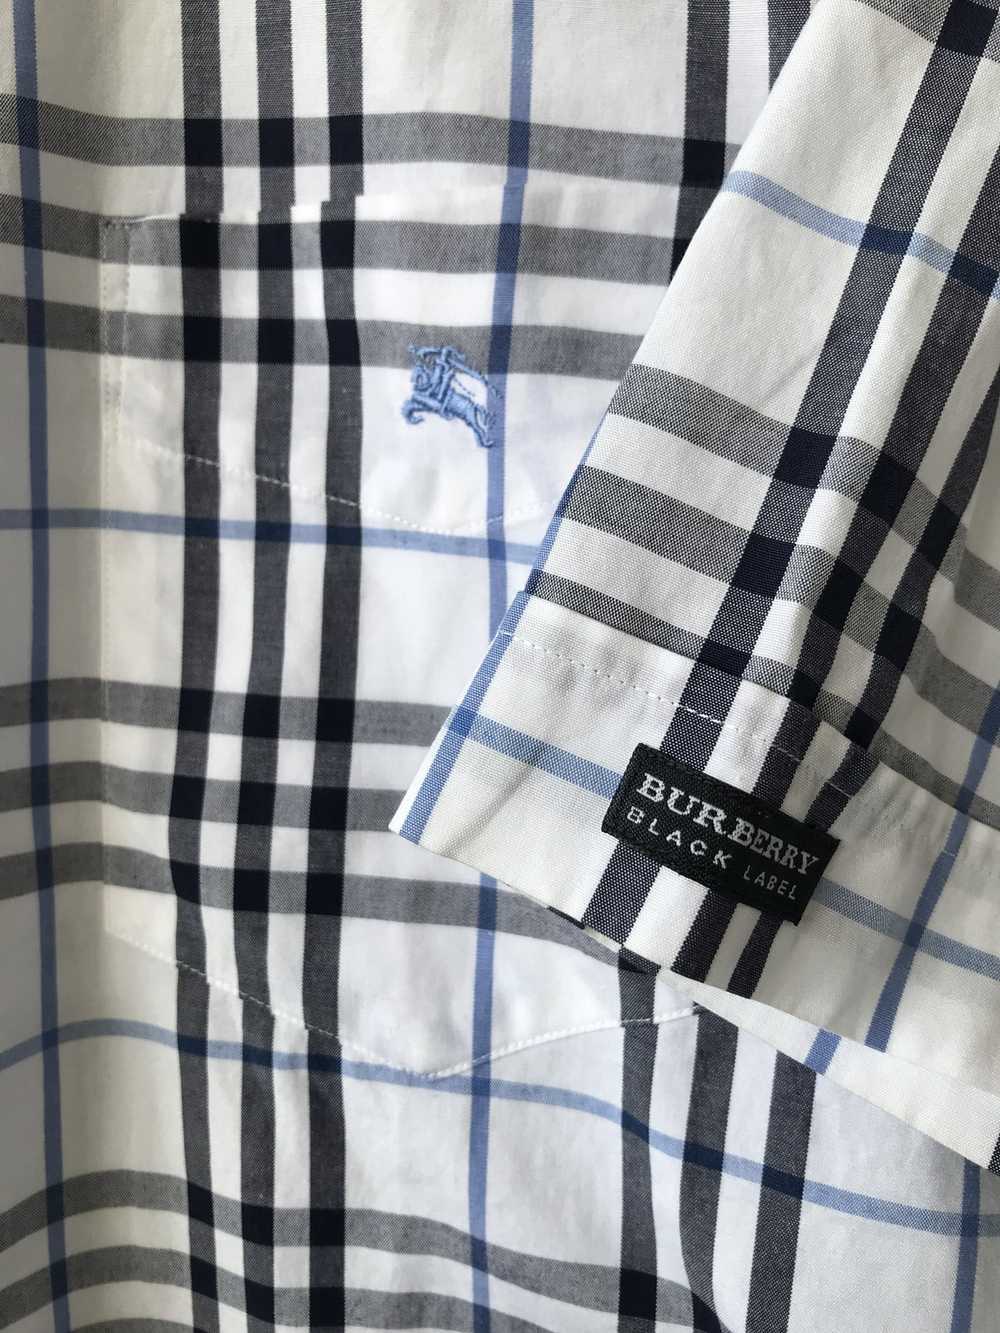 Burberry Burberry Black Label Checkered shirt - image 3